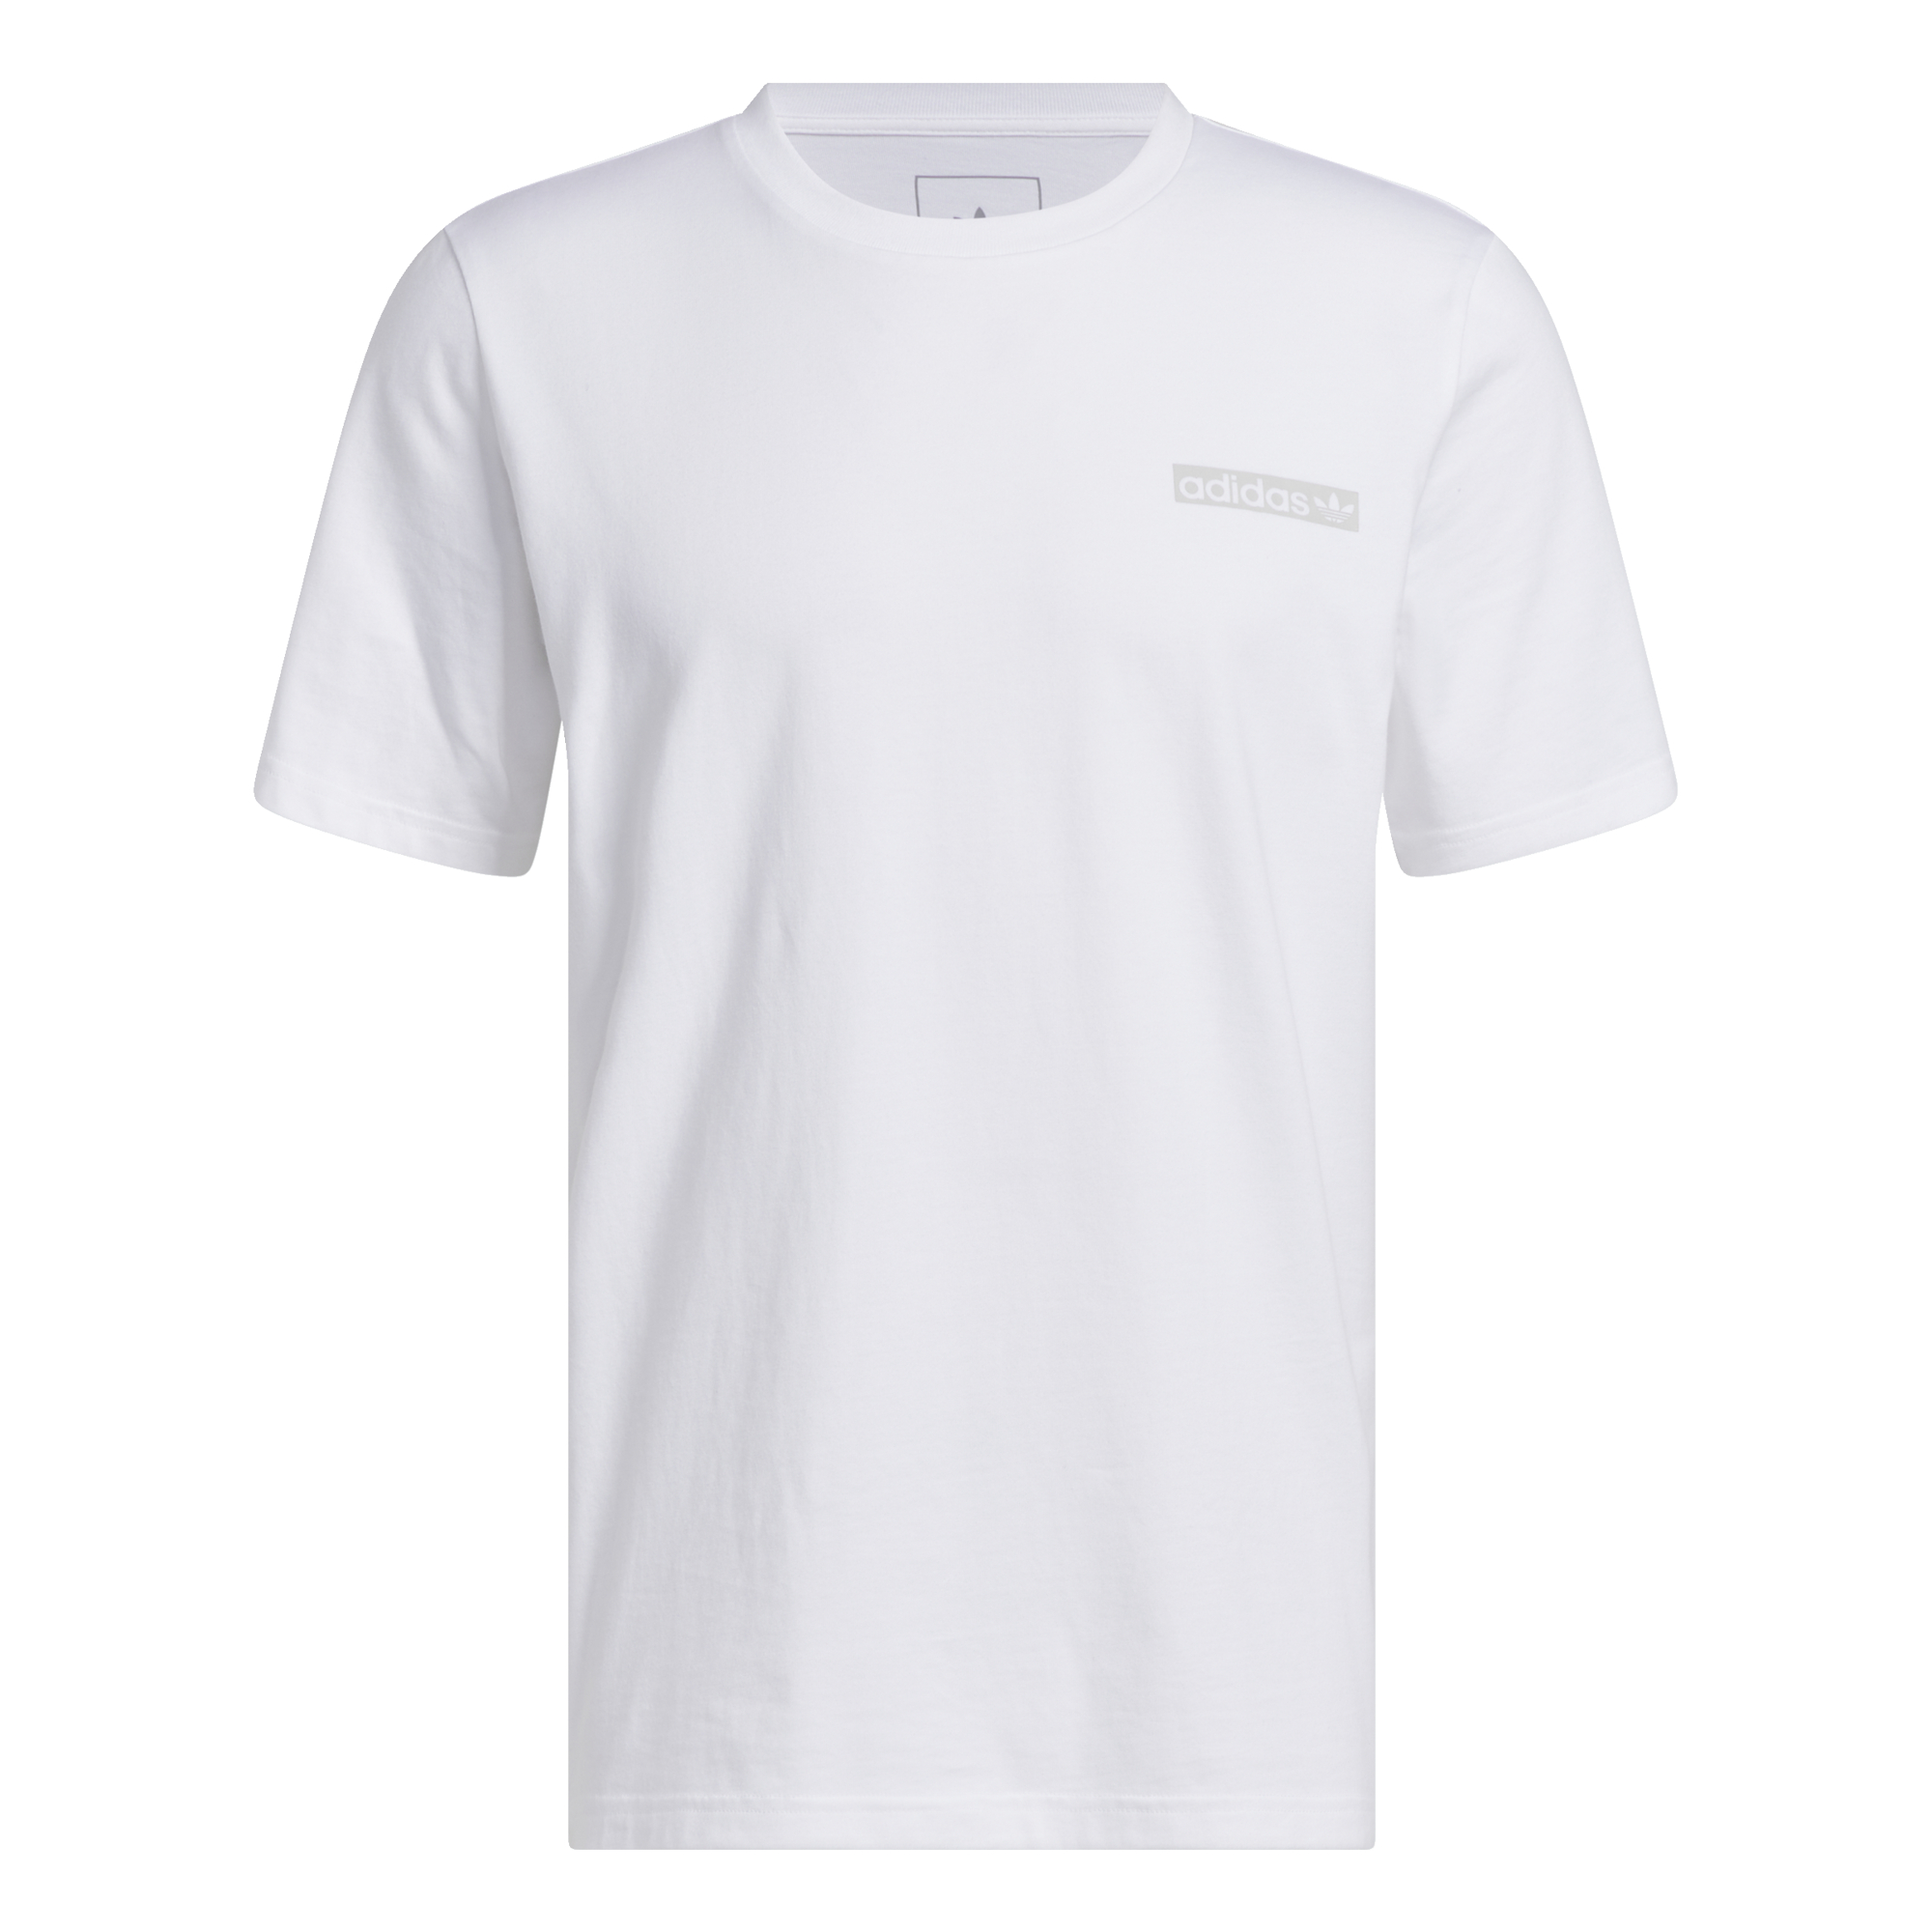 adidas 4.0 Circle Tee Men's Shirts | eBay